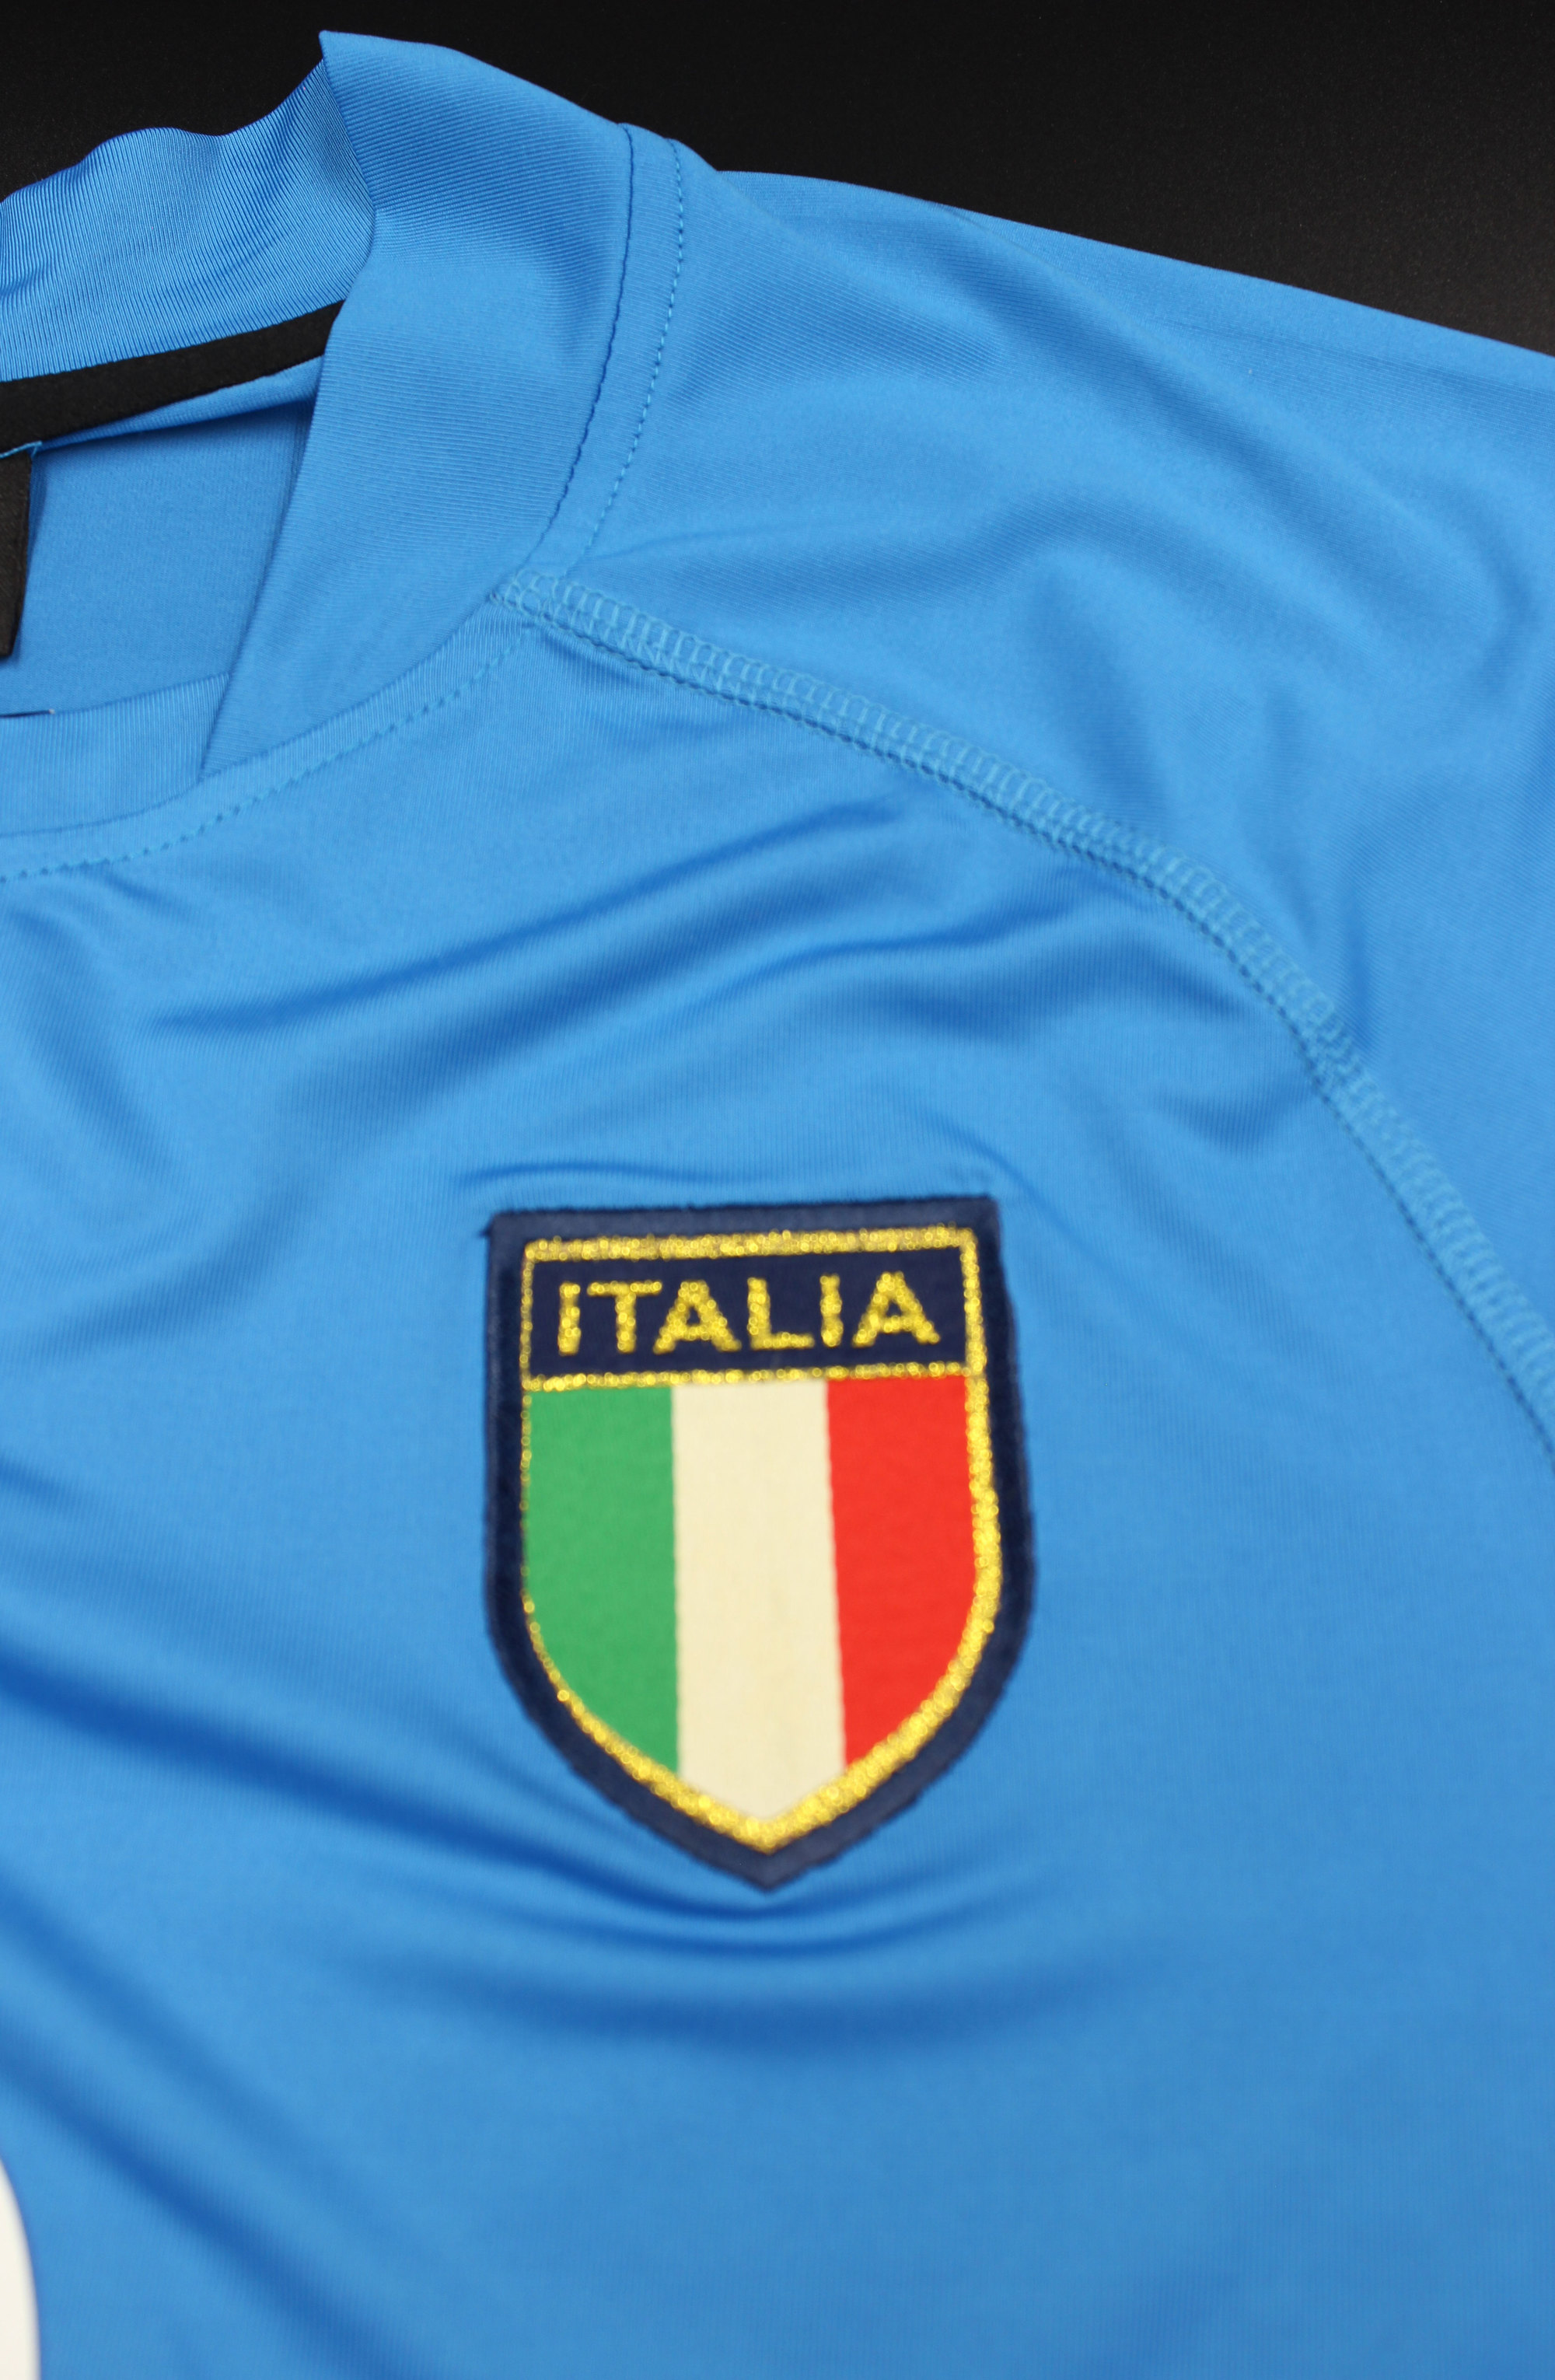 Italy 2002 World Cup Retro Calcio Jersey Kit [Free Shipping]